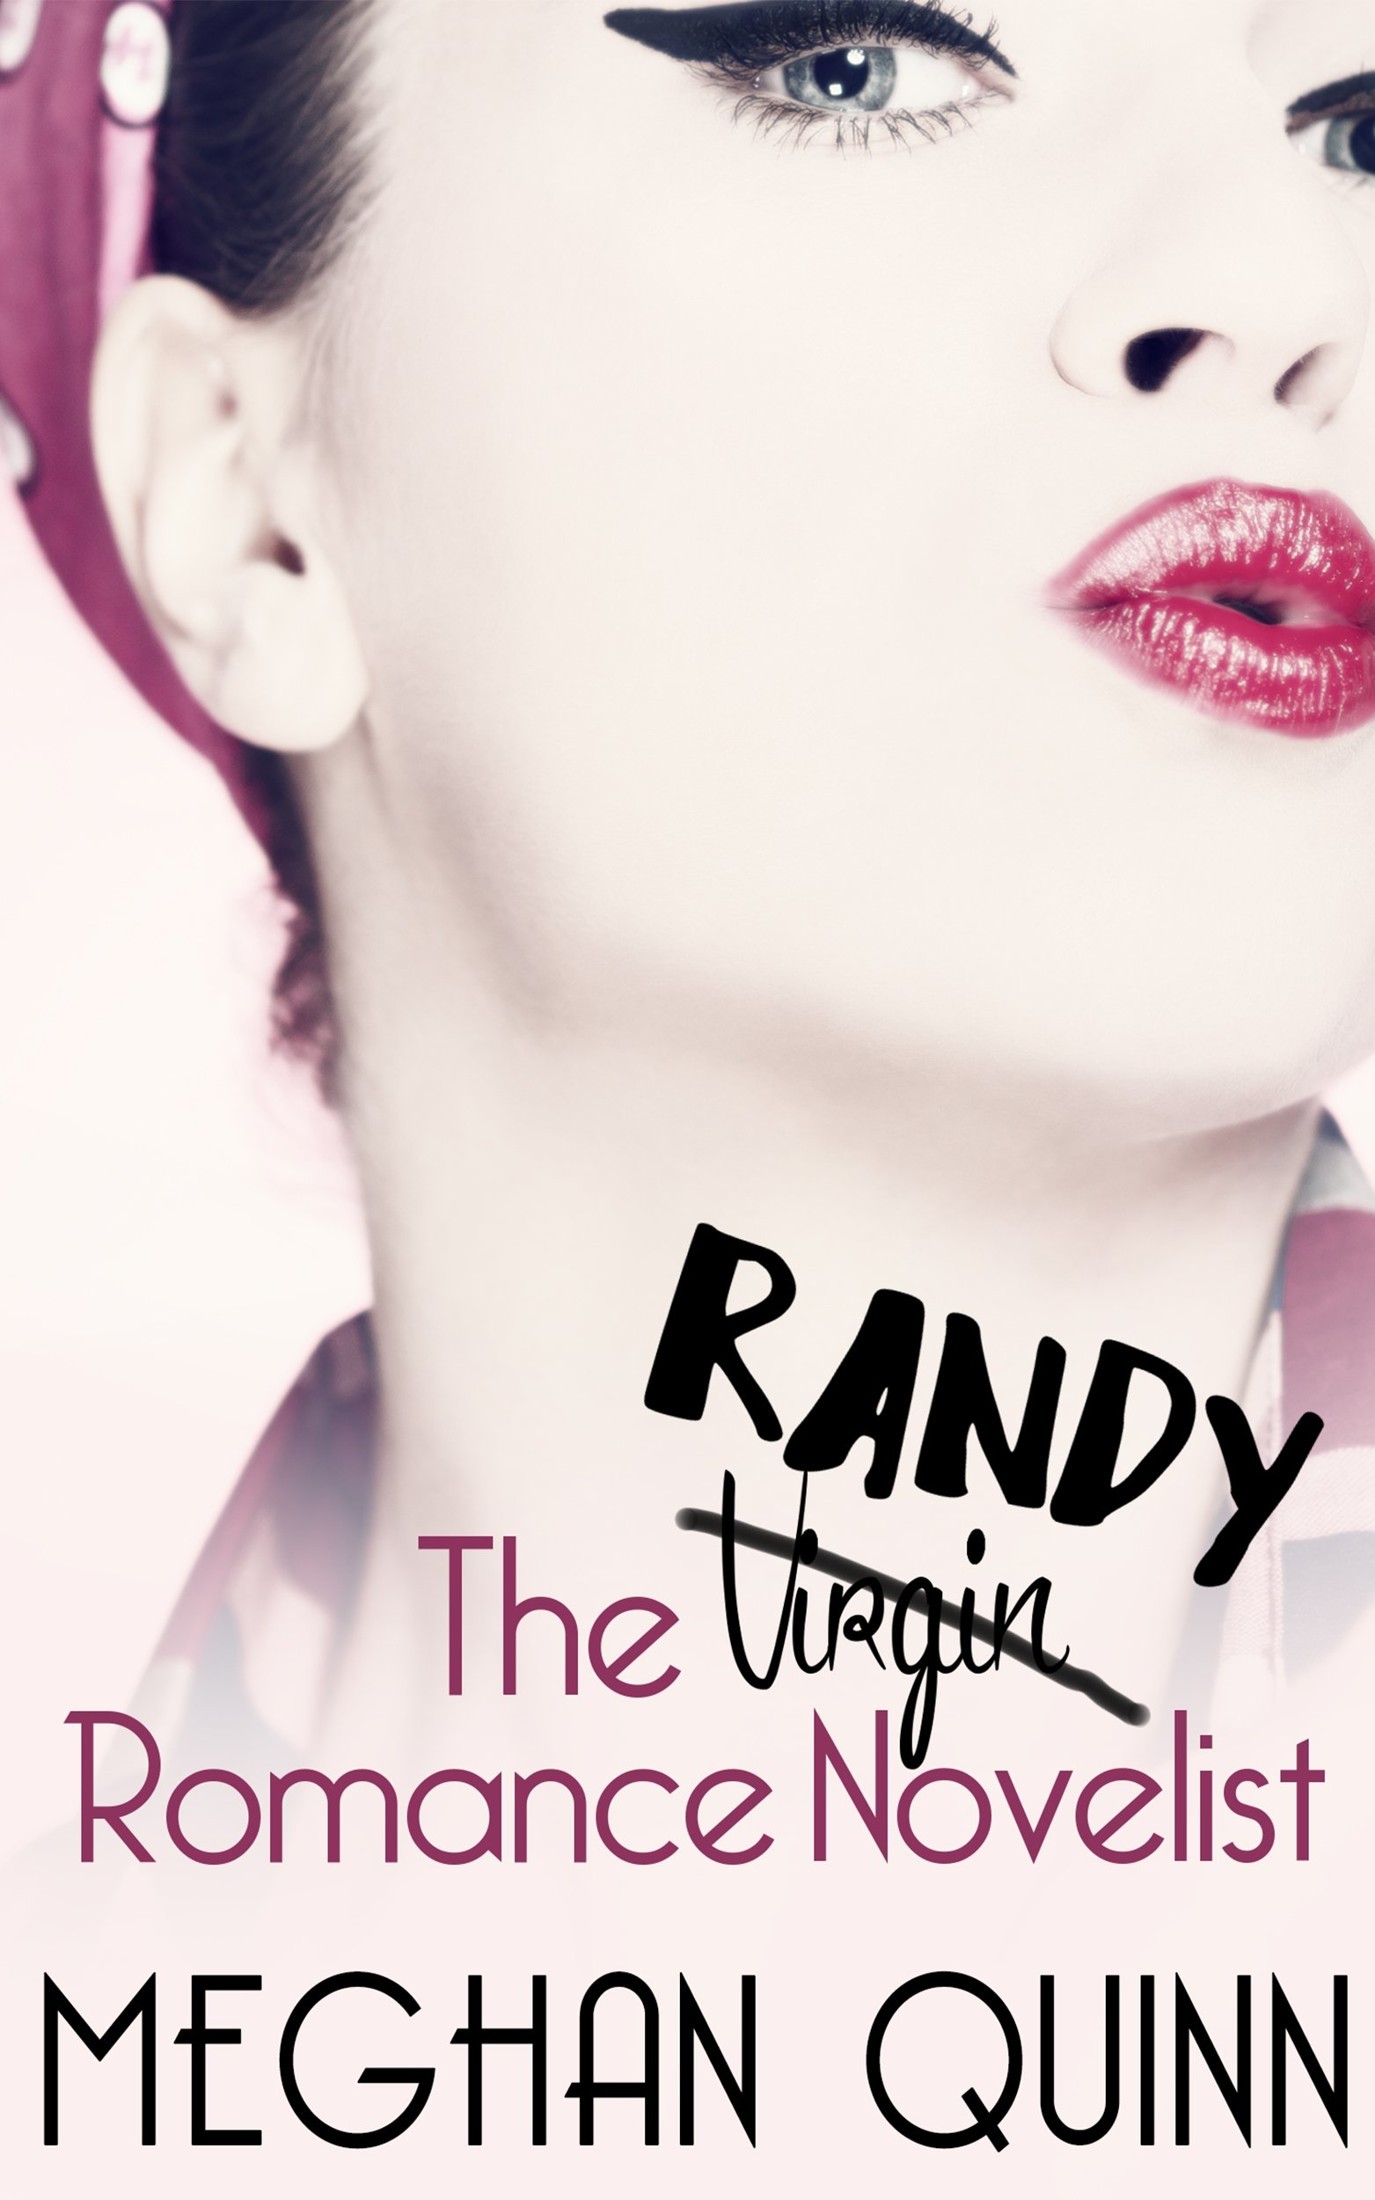 The Randy Romance Novelist by Meghan Quinn